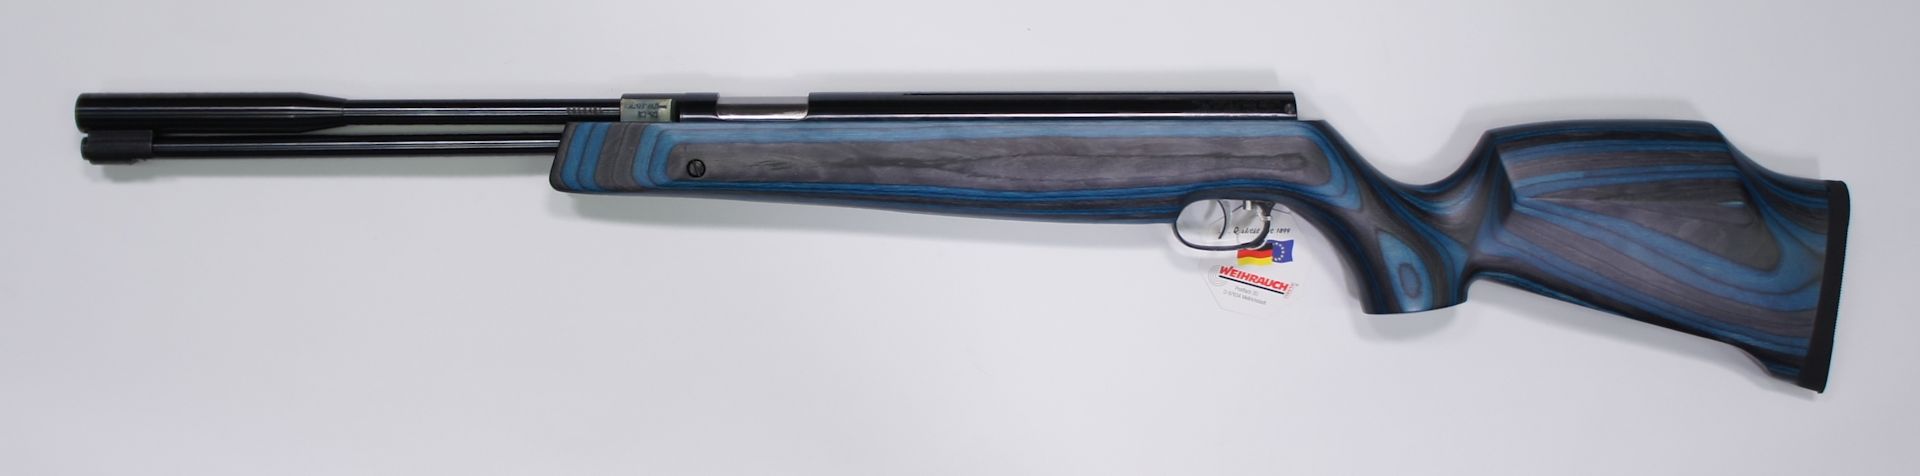 HW 97 K, F, Kaliber 4,5mm F, Schaft aus blauem Schichtholz